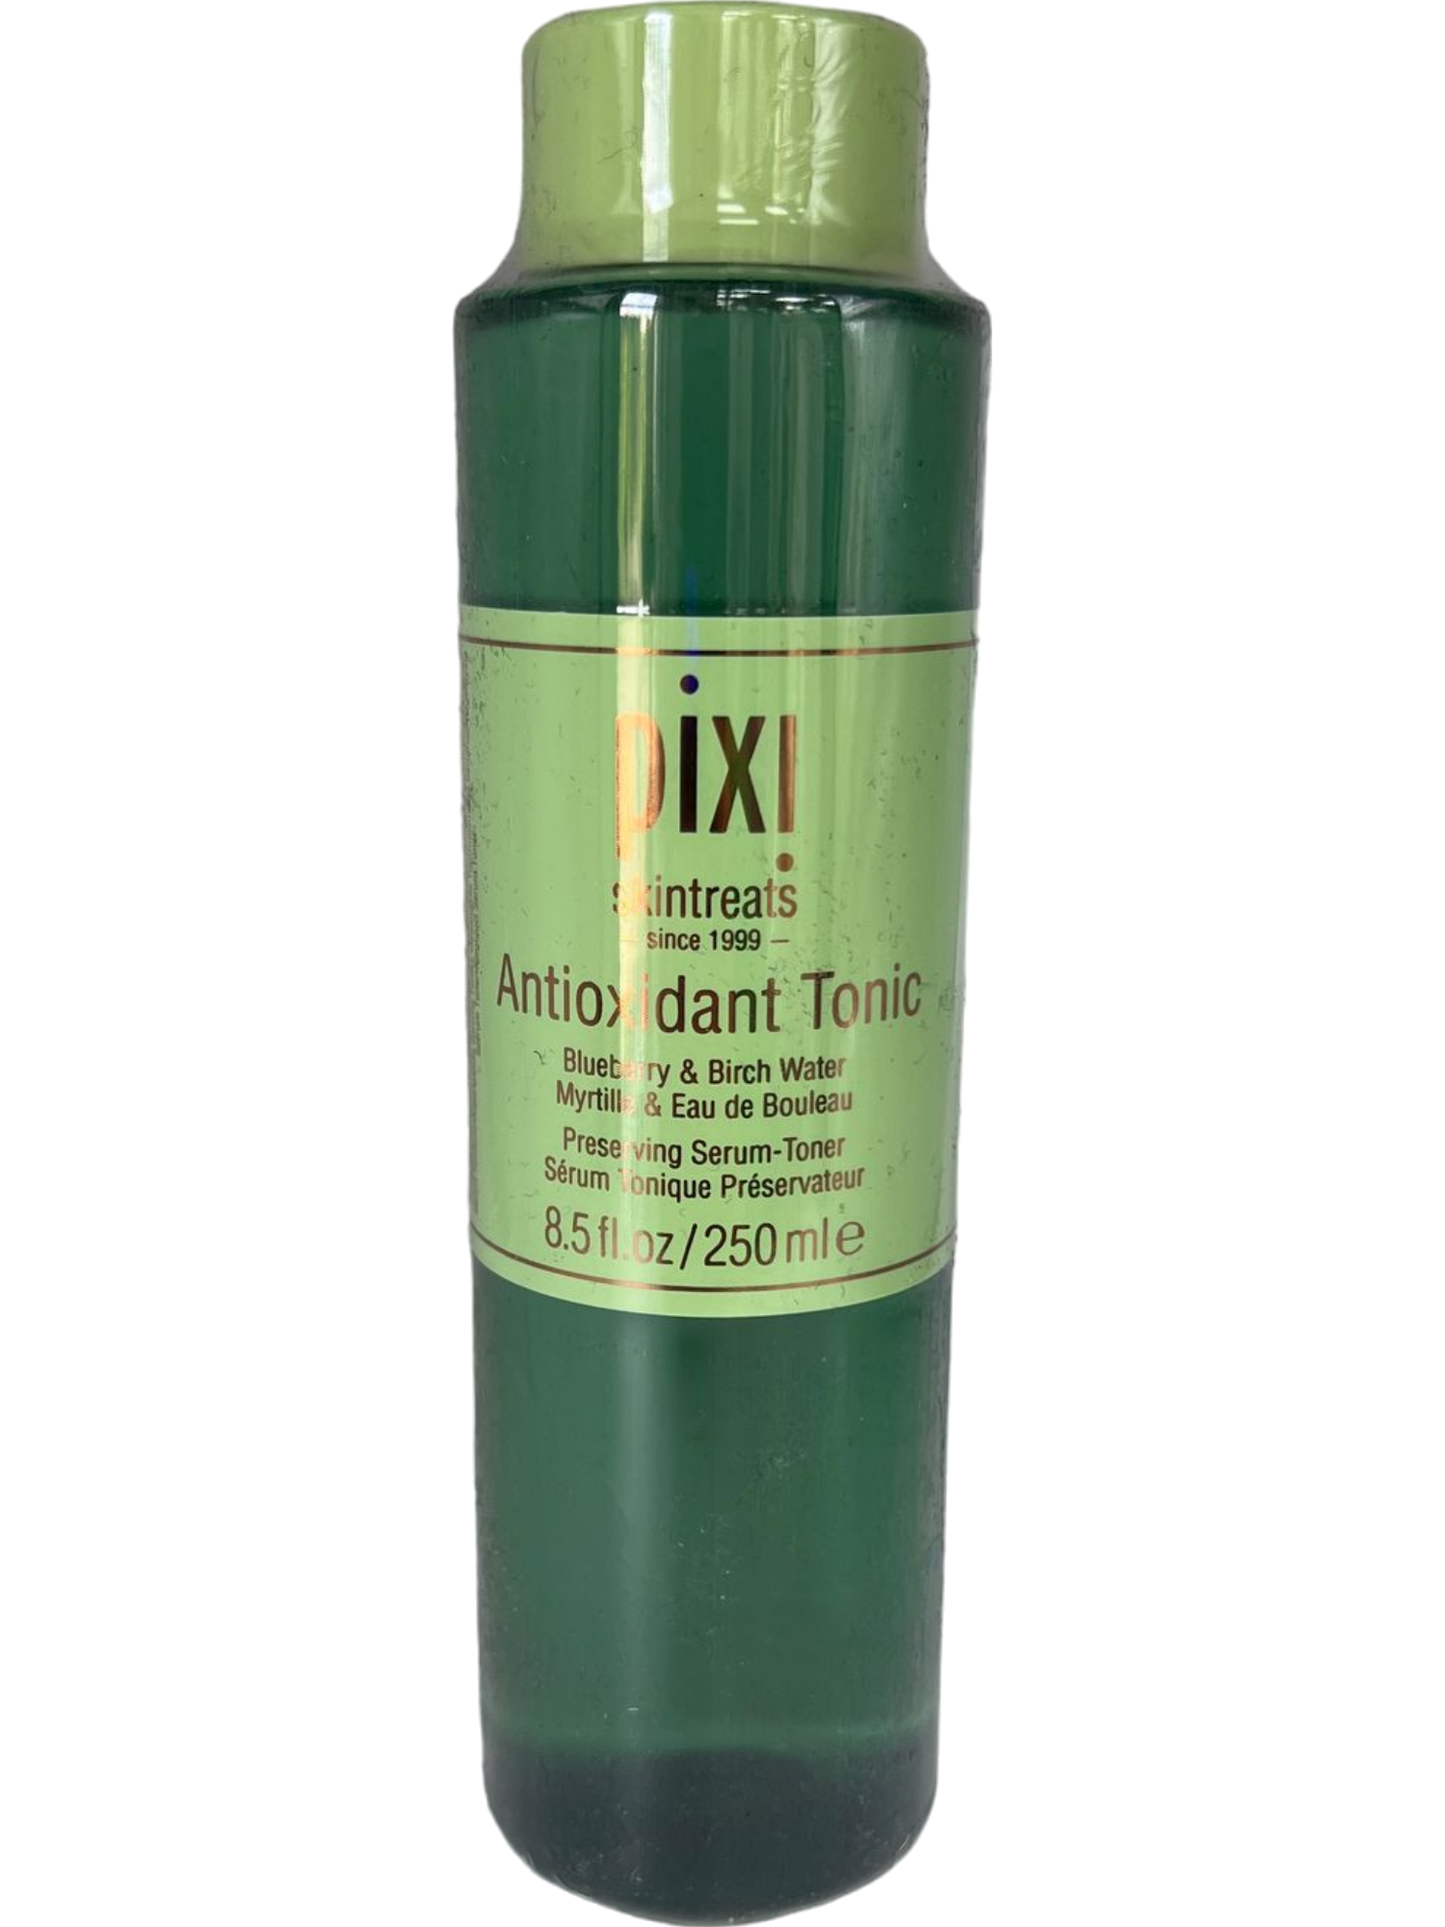 Pixi Antioxidant Tonic 250ml